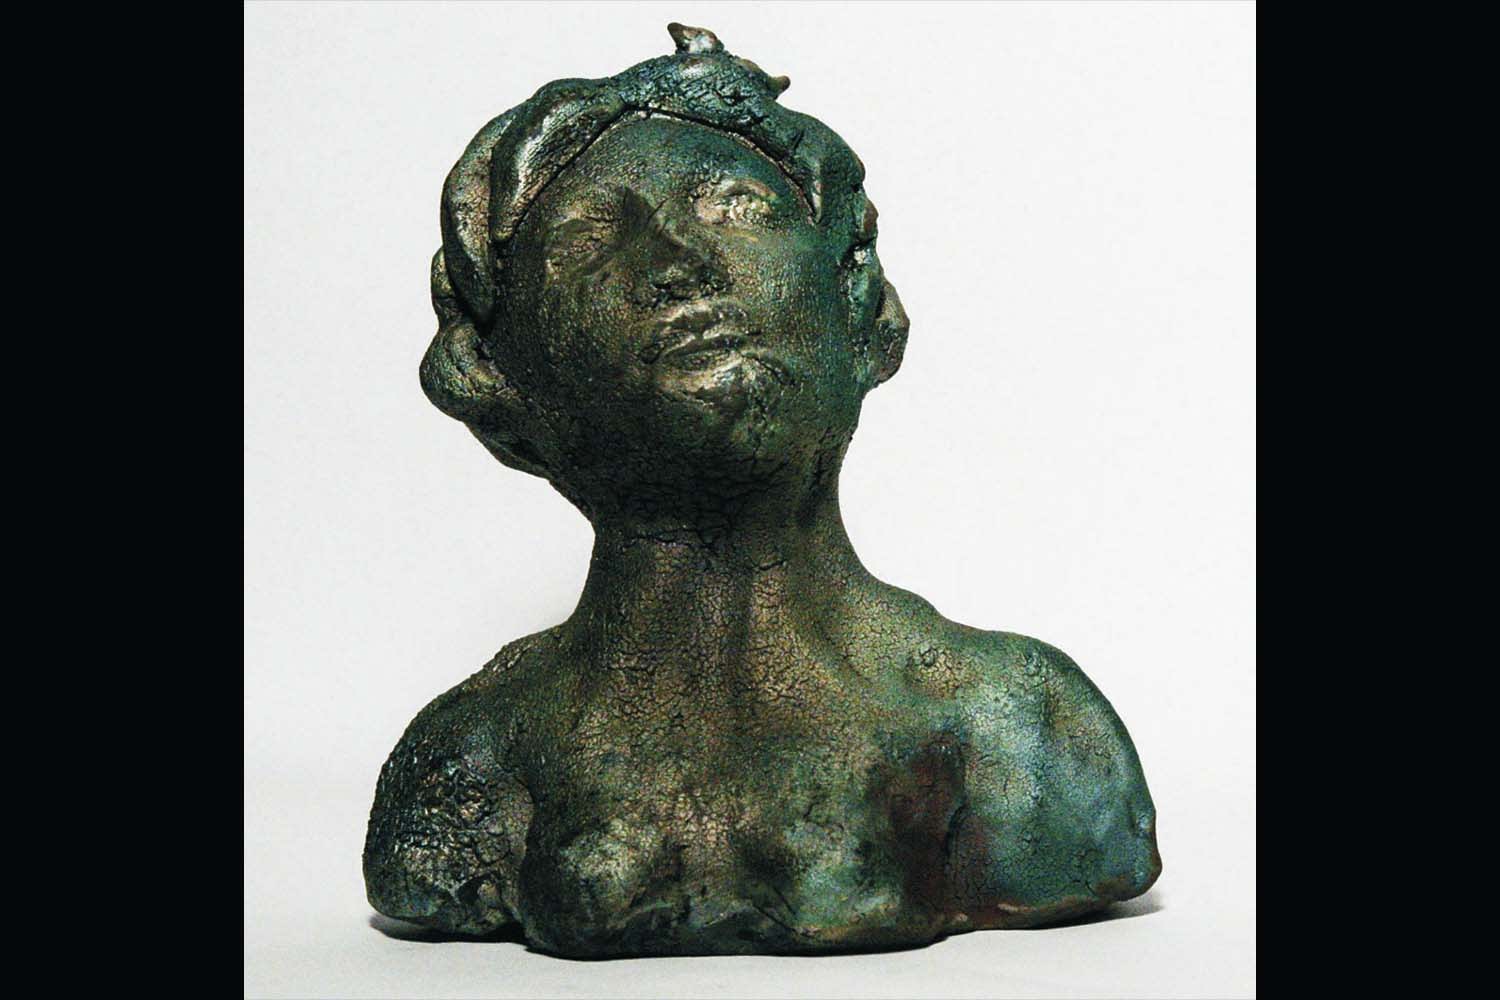 Linda Szoldatits, Ceramic bust of woman wearing a headpiece.